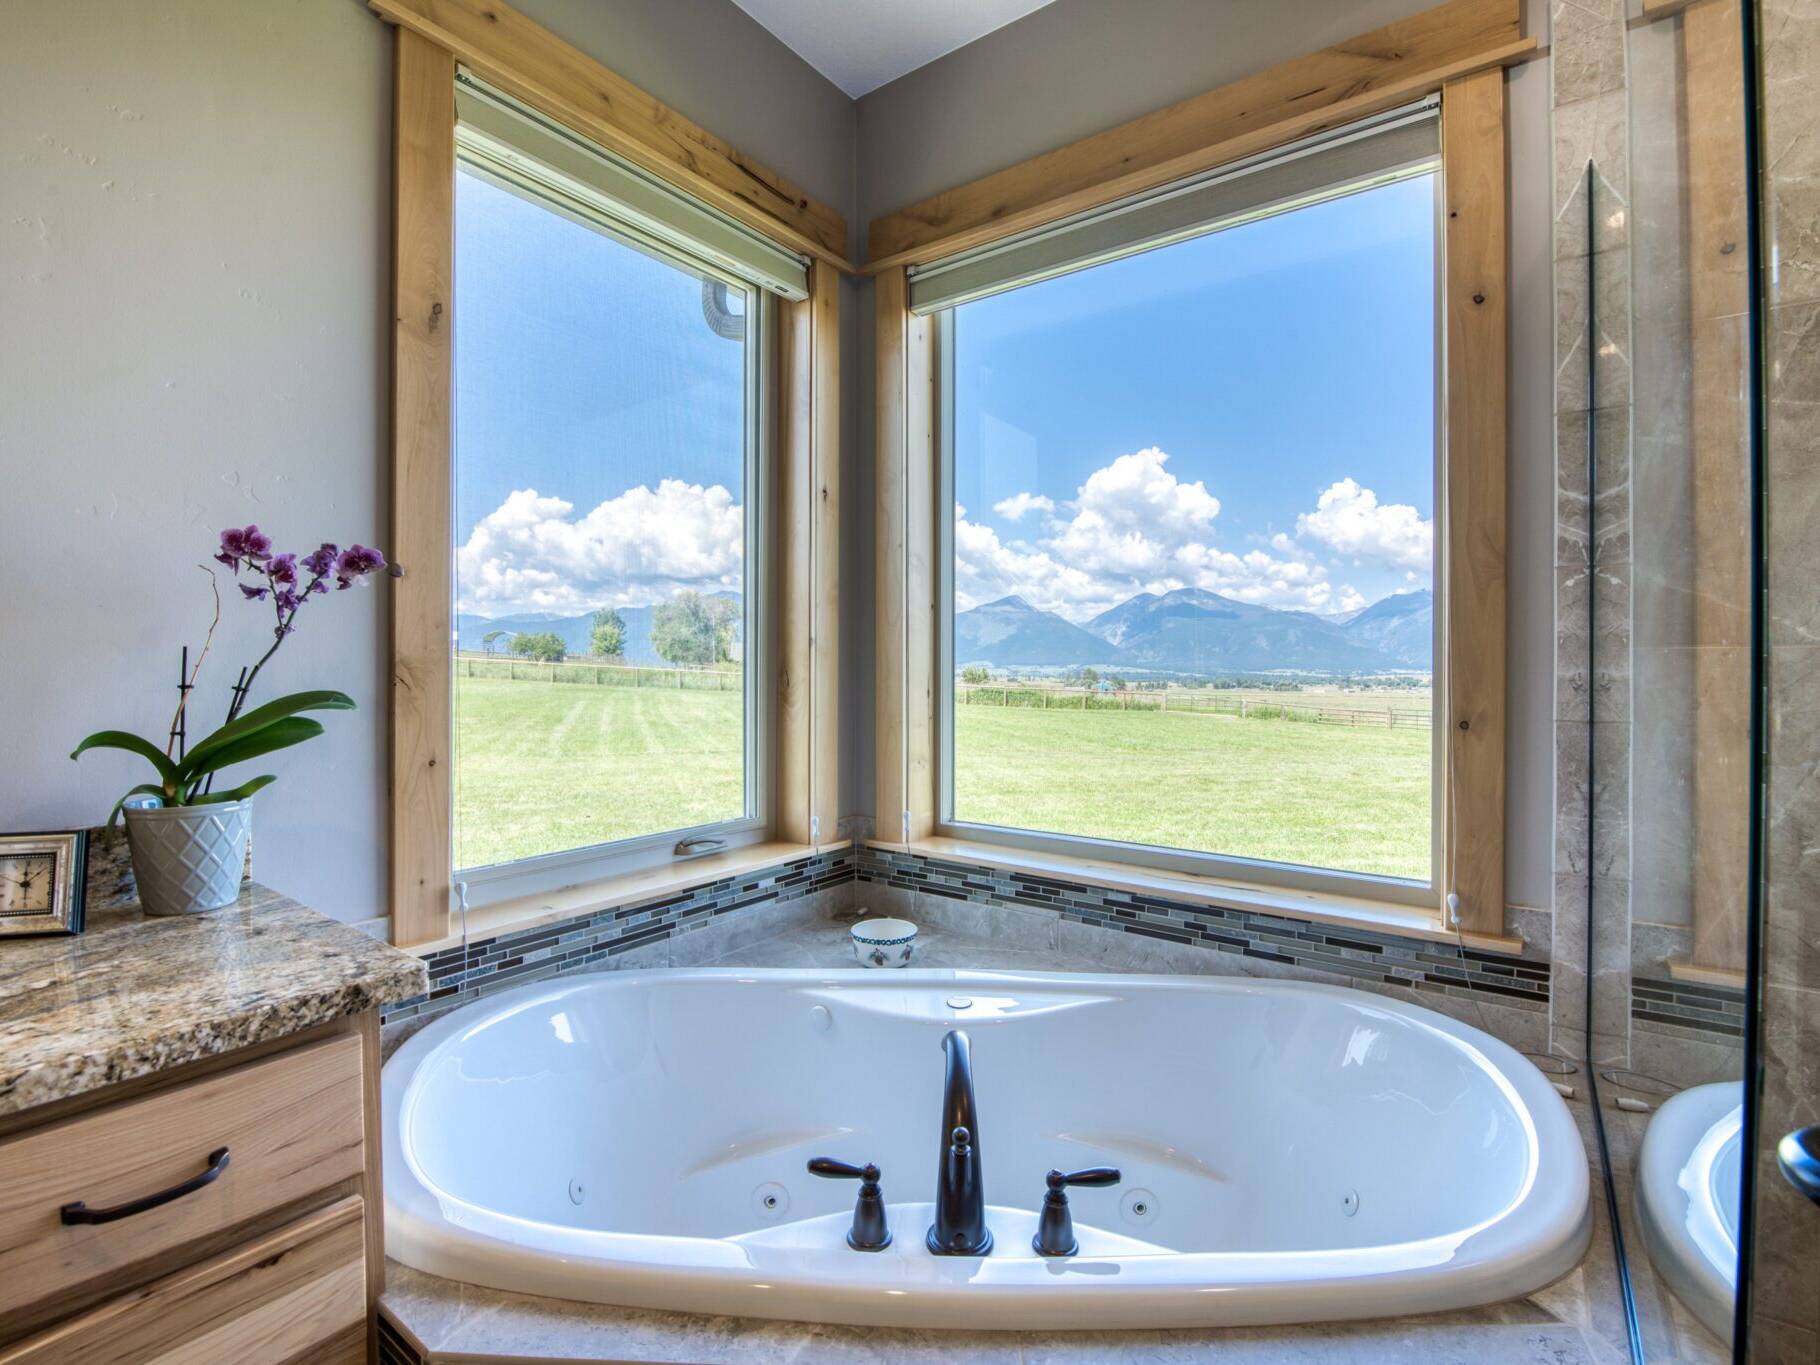 Jetted corner tub in a custom home built by Big Sky Builders in Stevensville, MT